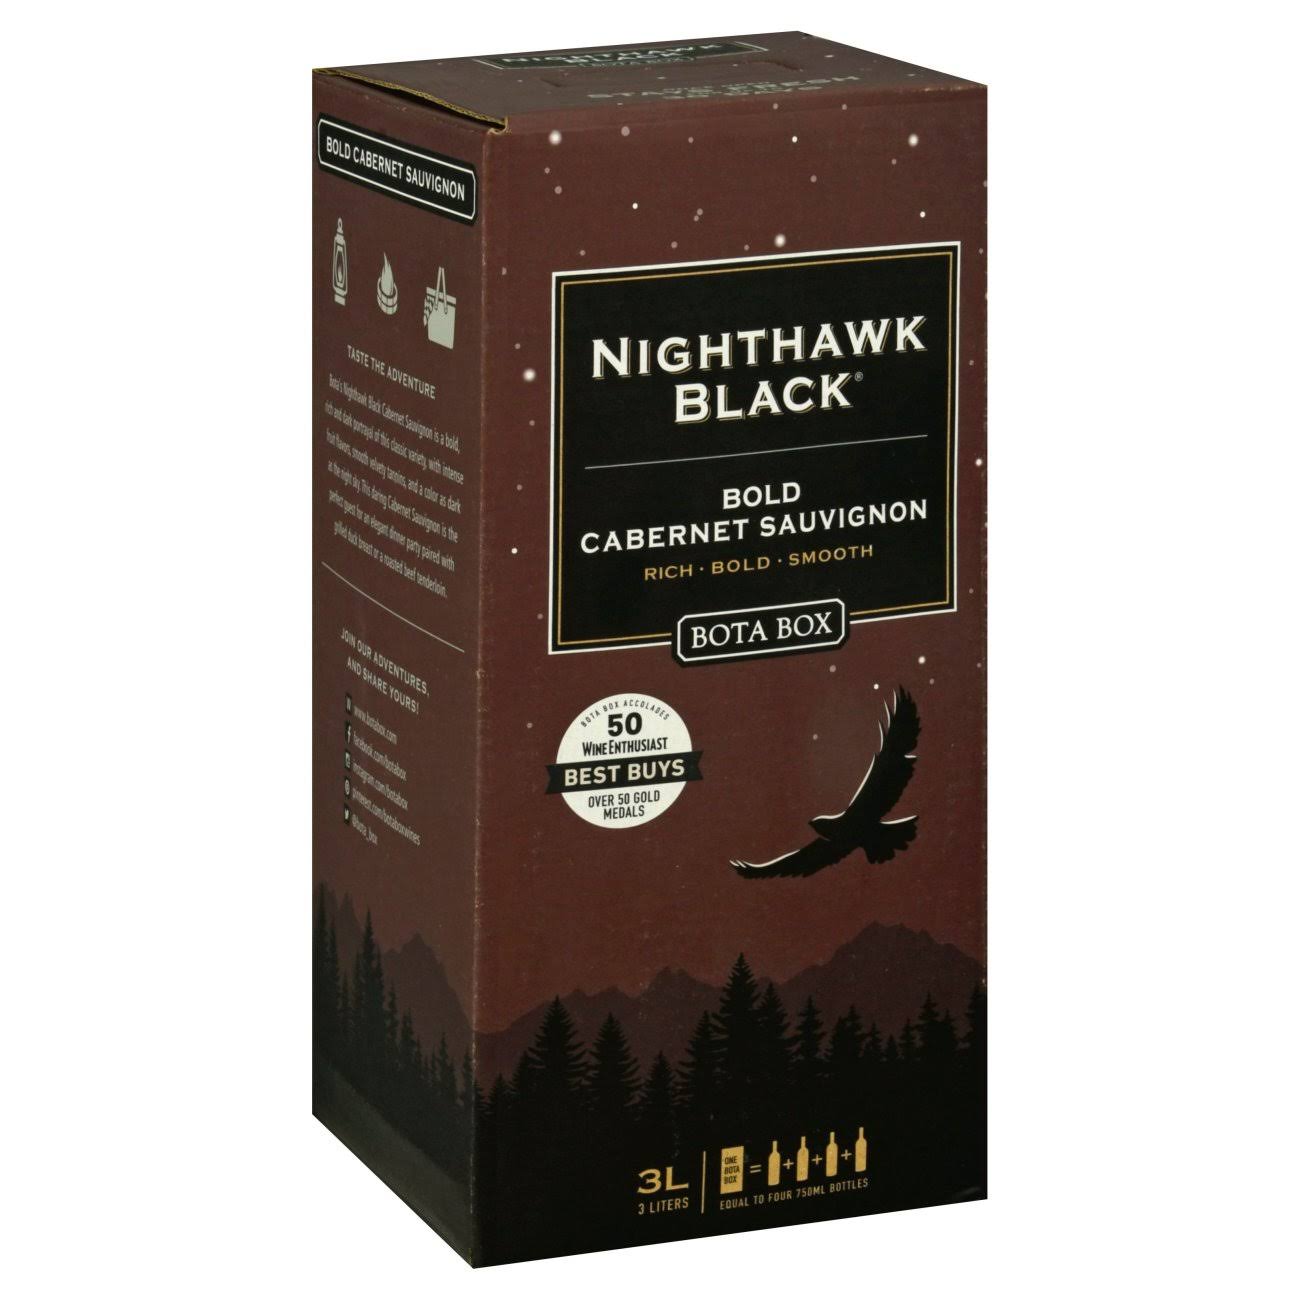 Bota Box Cabernet Sauvignon, Bold, Nighthawk Black - 3 liters